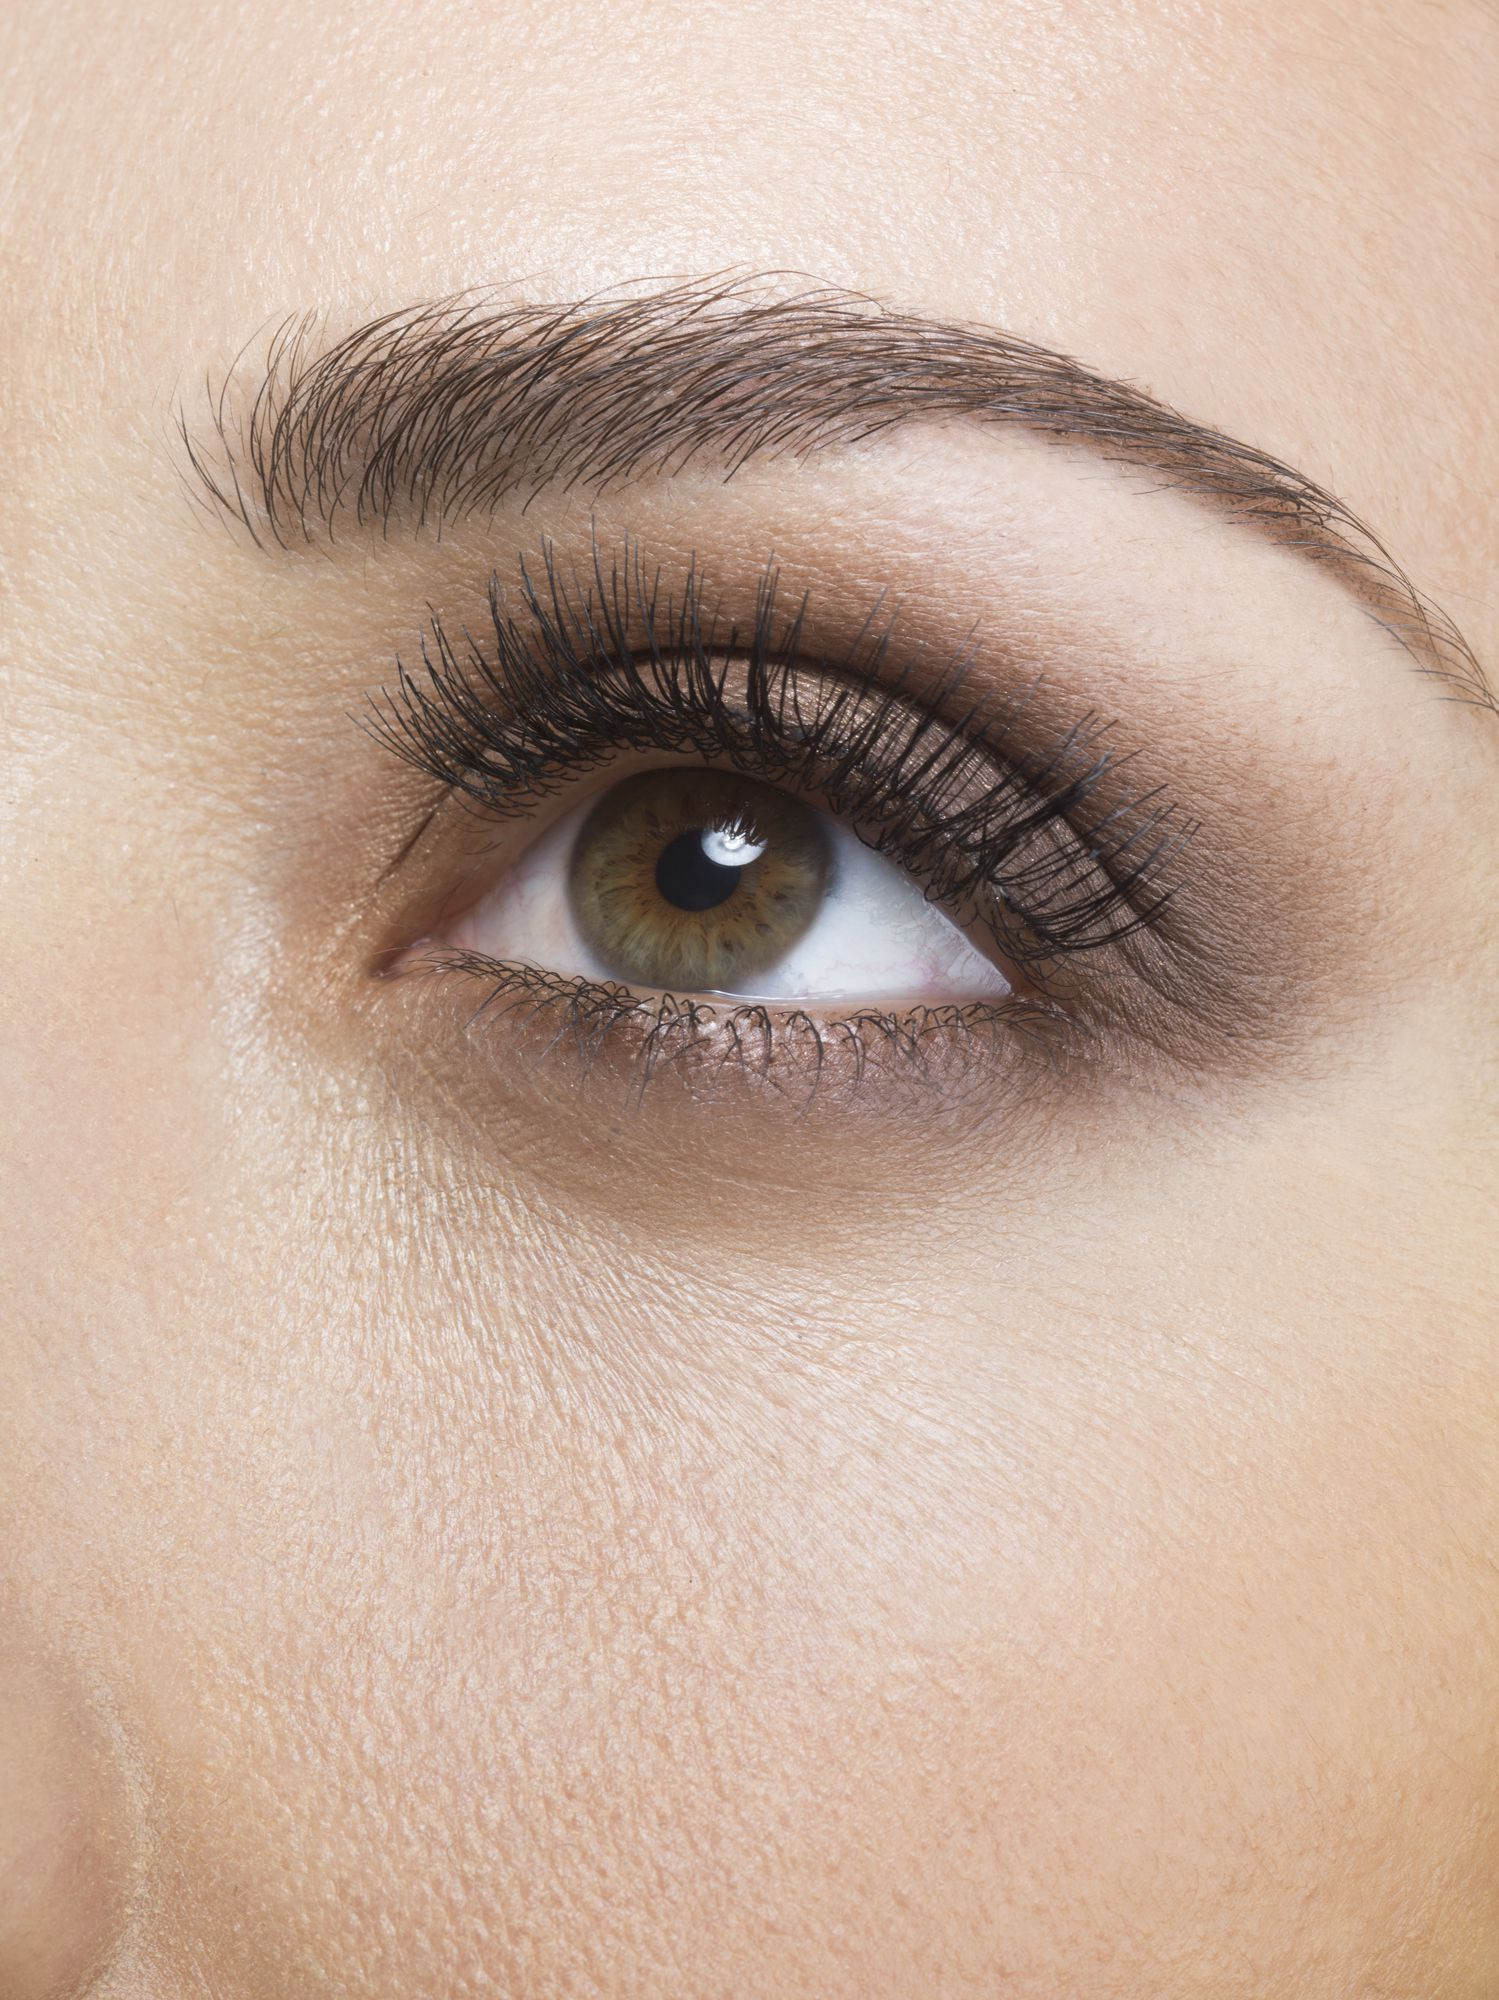 Eye Makeup Over 60 12 Best Makeup Tips For Older Women Makeup Advice For Women Over 50